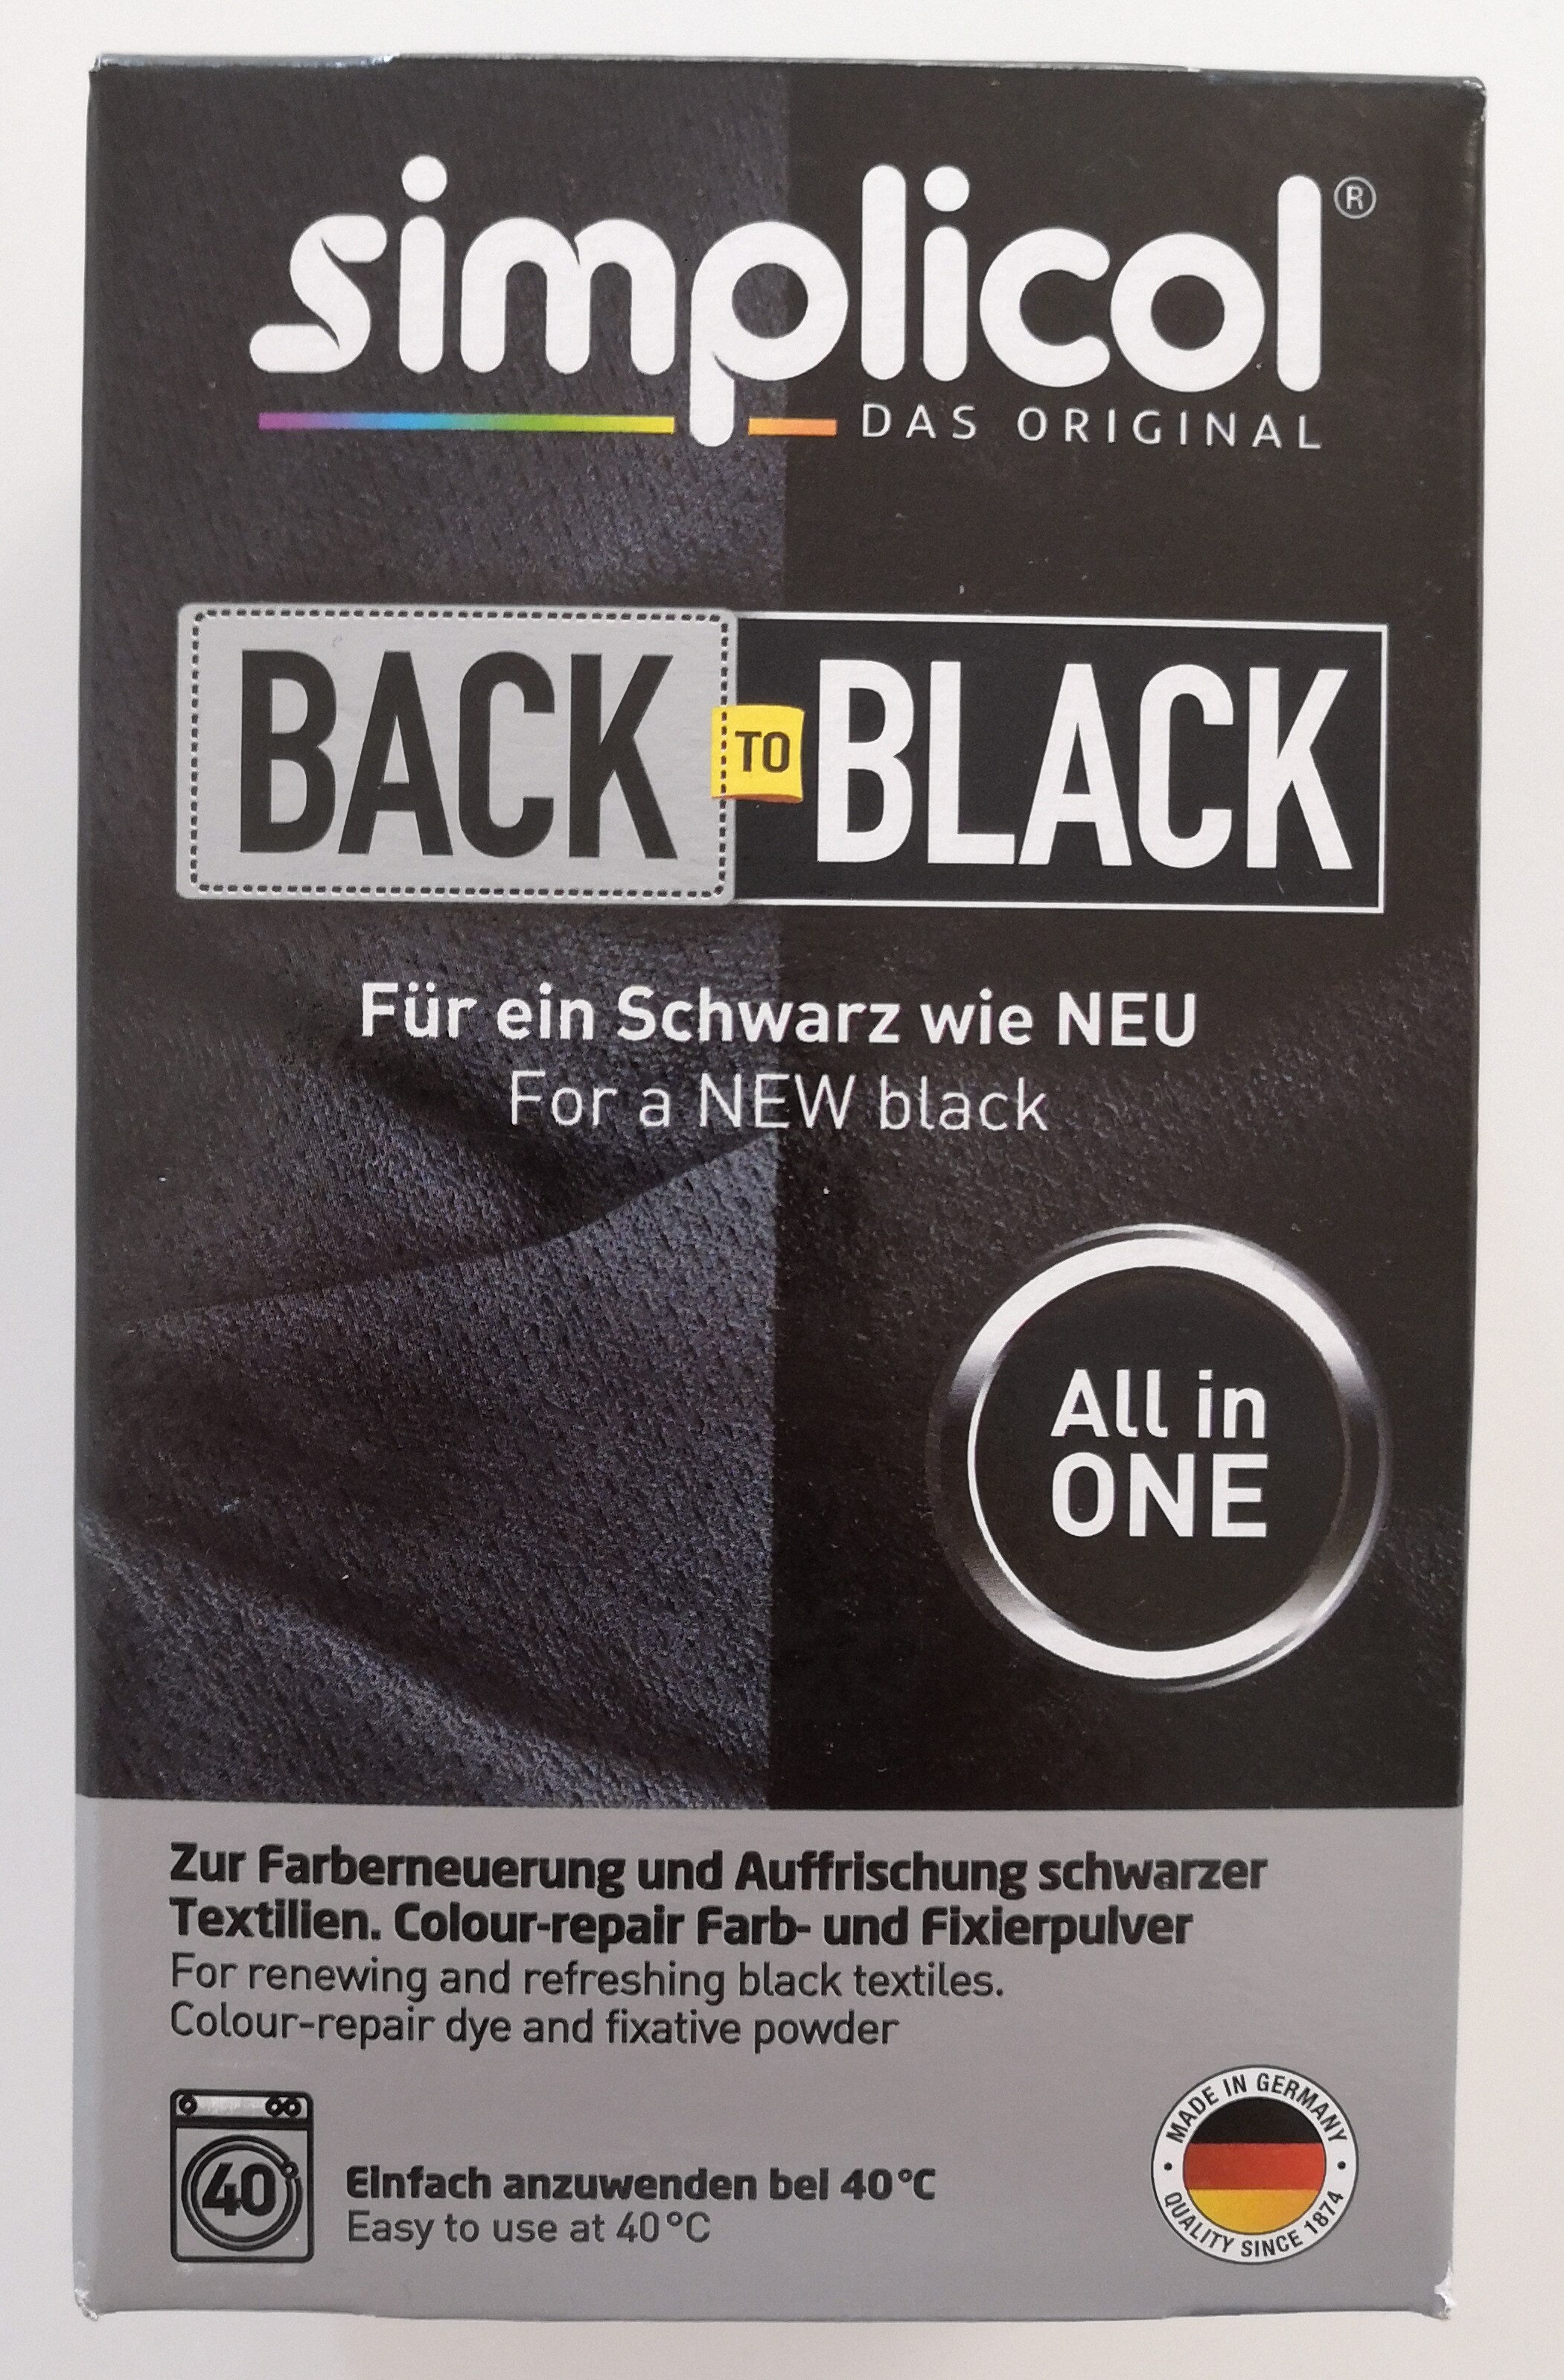 Back-To-Black - Product - de